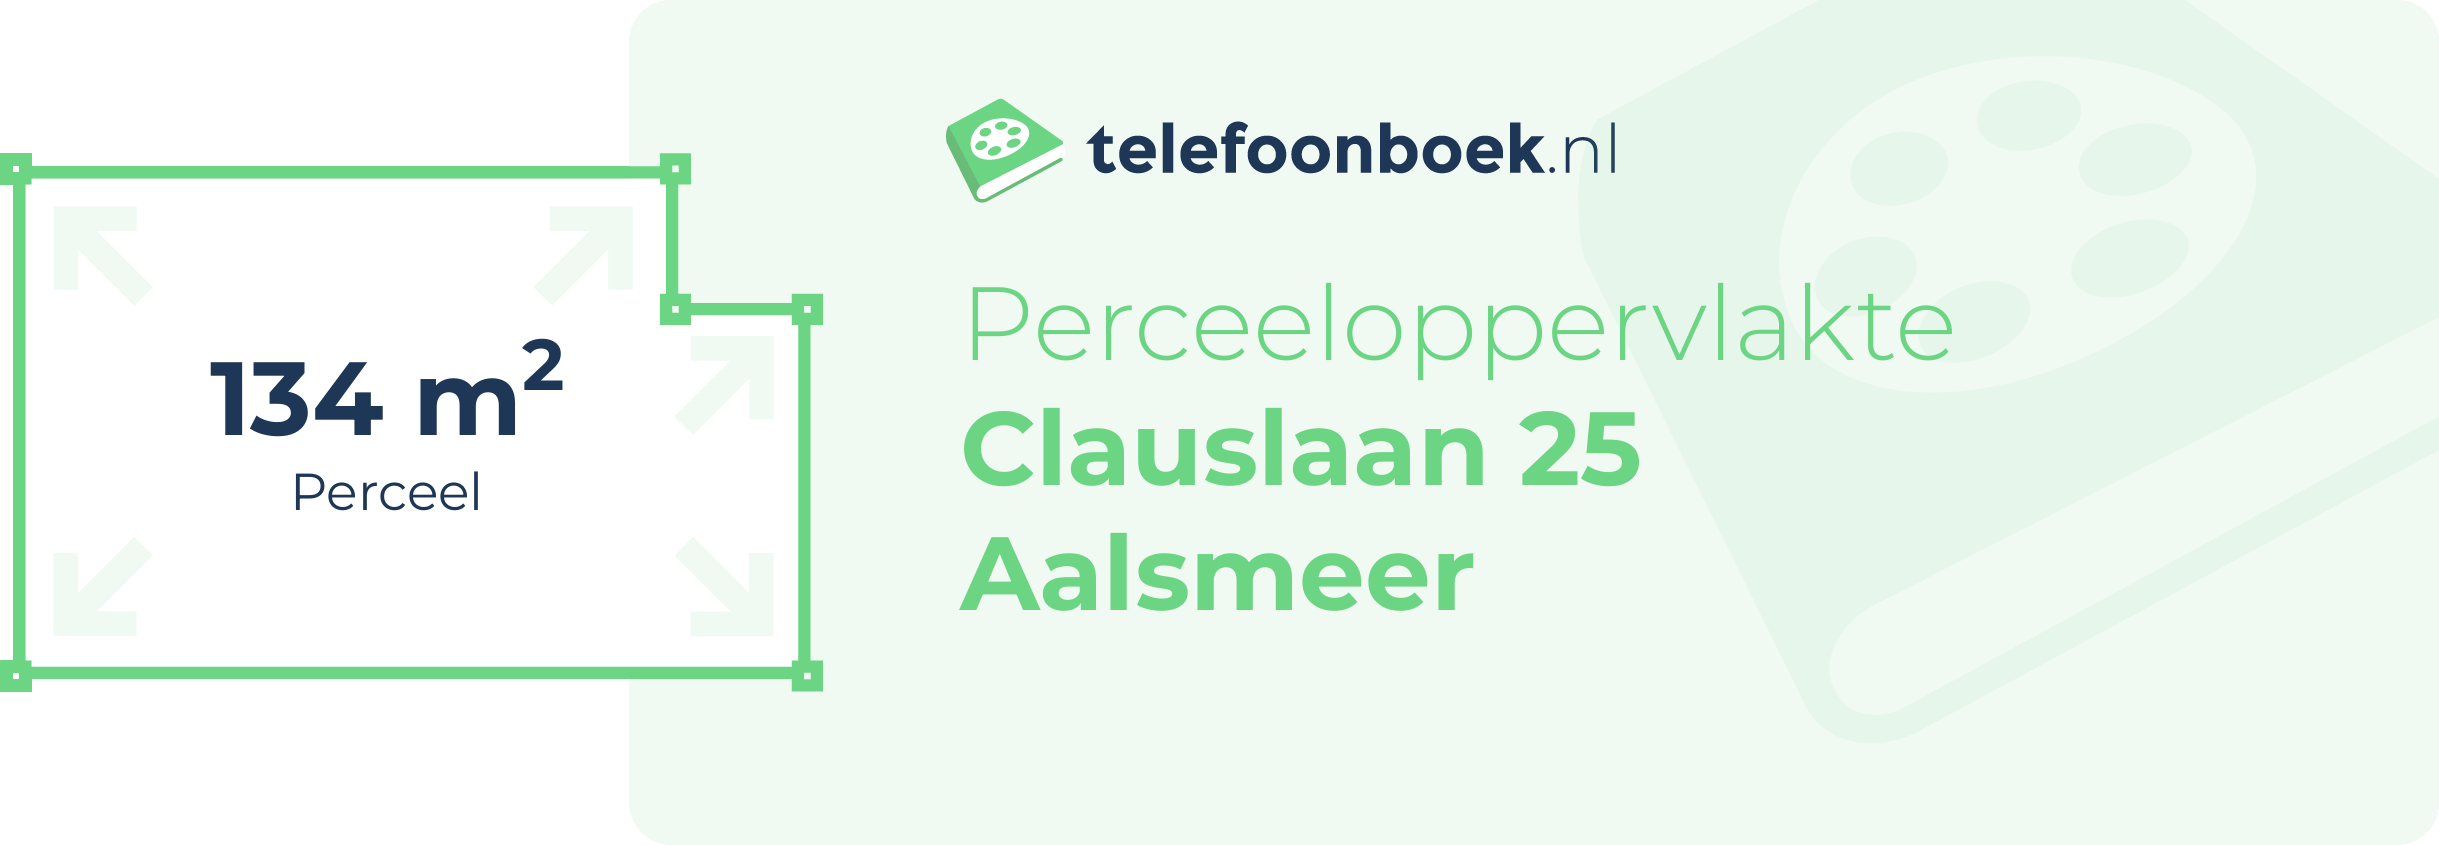 Perceeloppervlakte Clauslaan 25 Aalsmeer